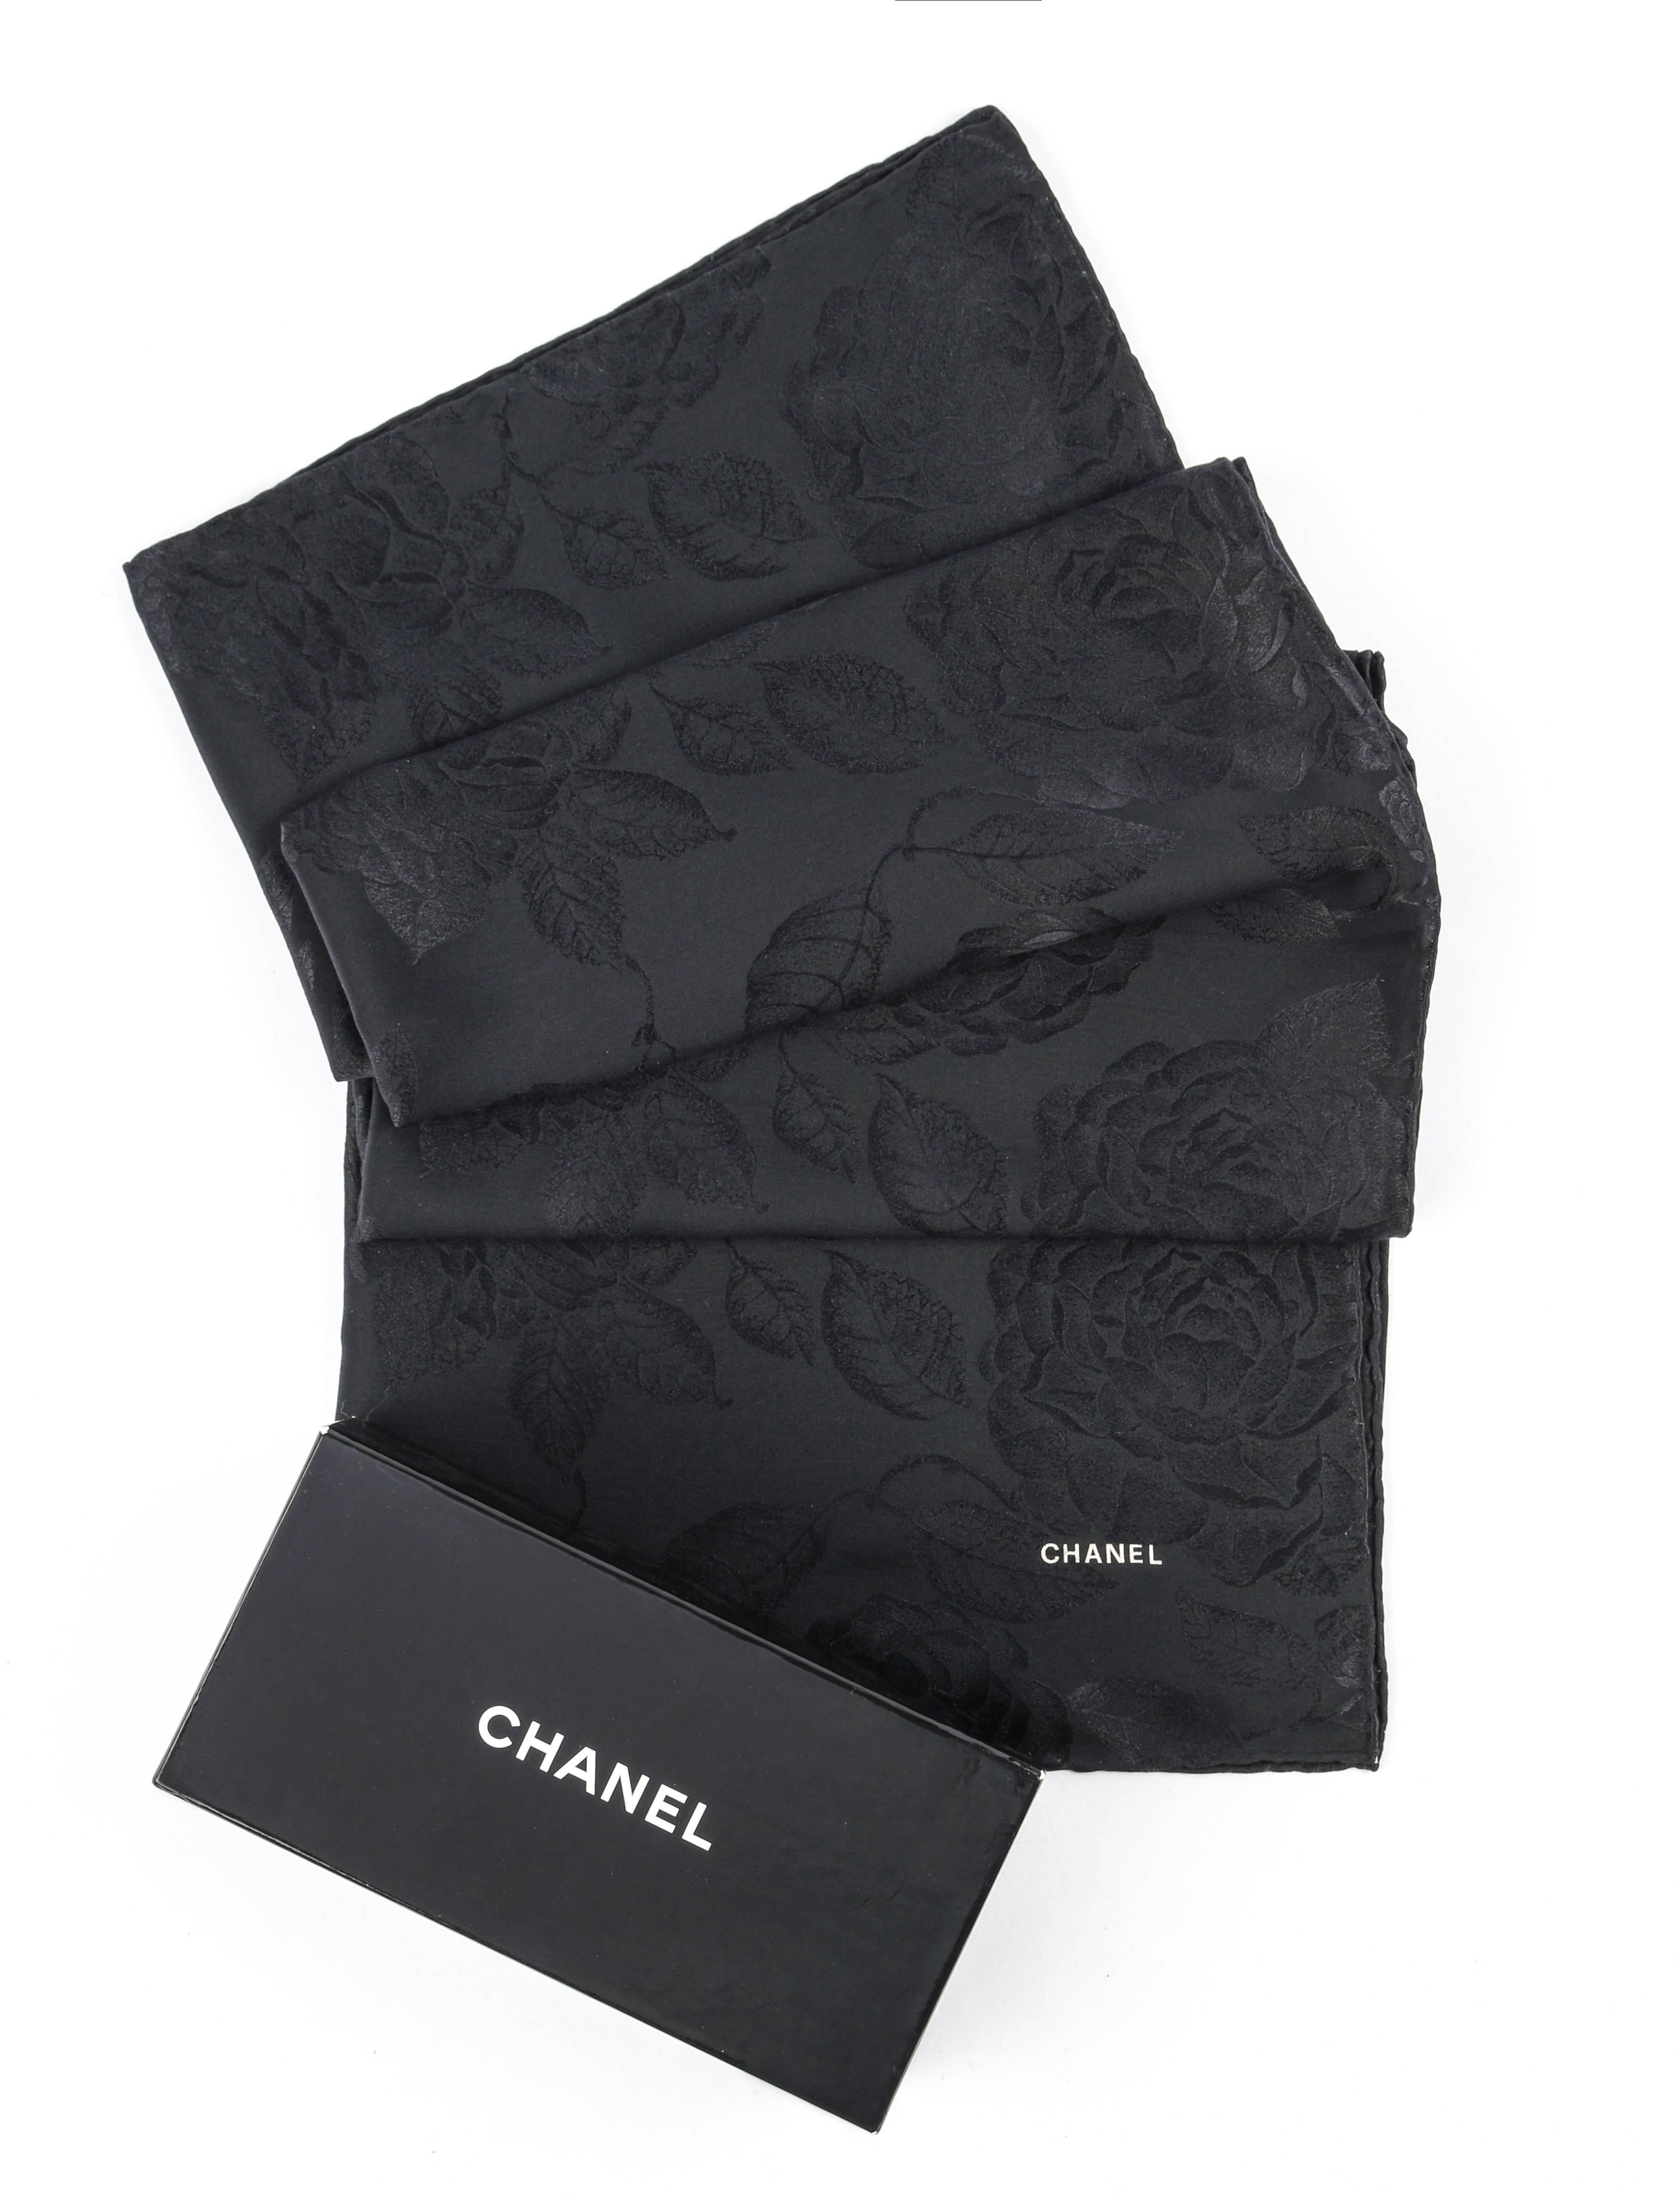 Chanel black floral print 100% silk scarf. All over black satin camillia print. Off white 